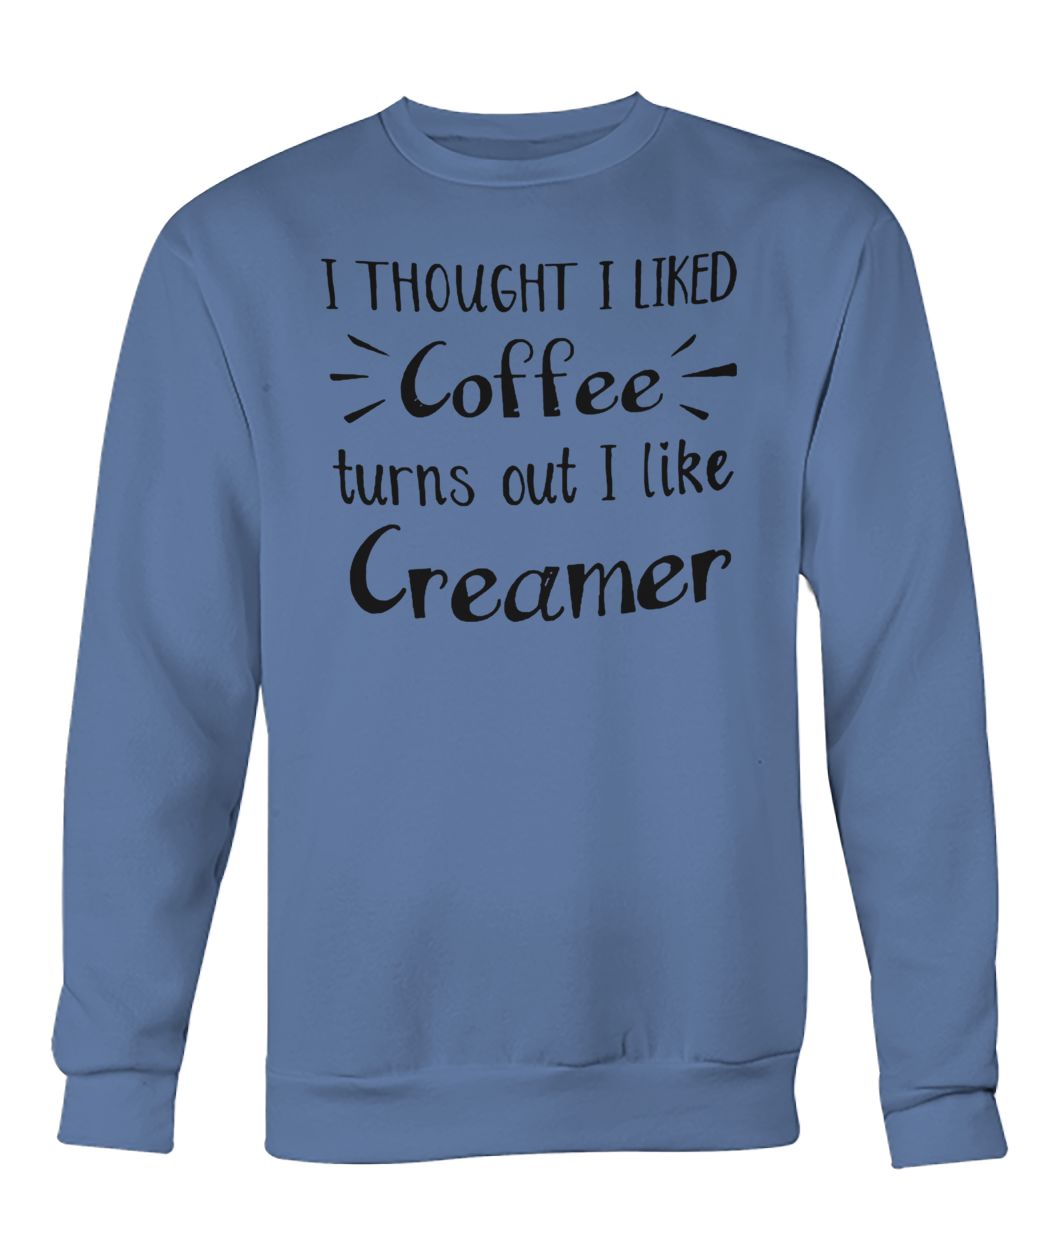 I thought I liked coffee turns out I like creamer crew neck sweatshirt